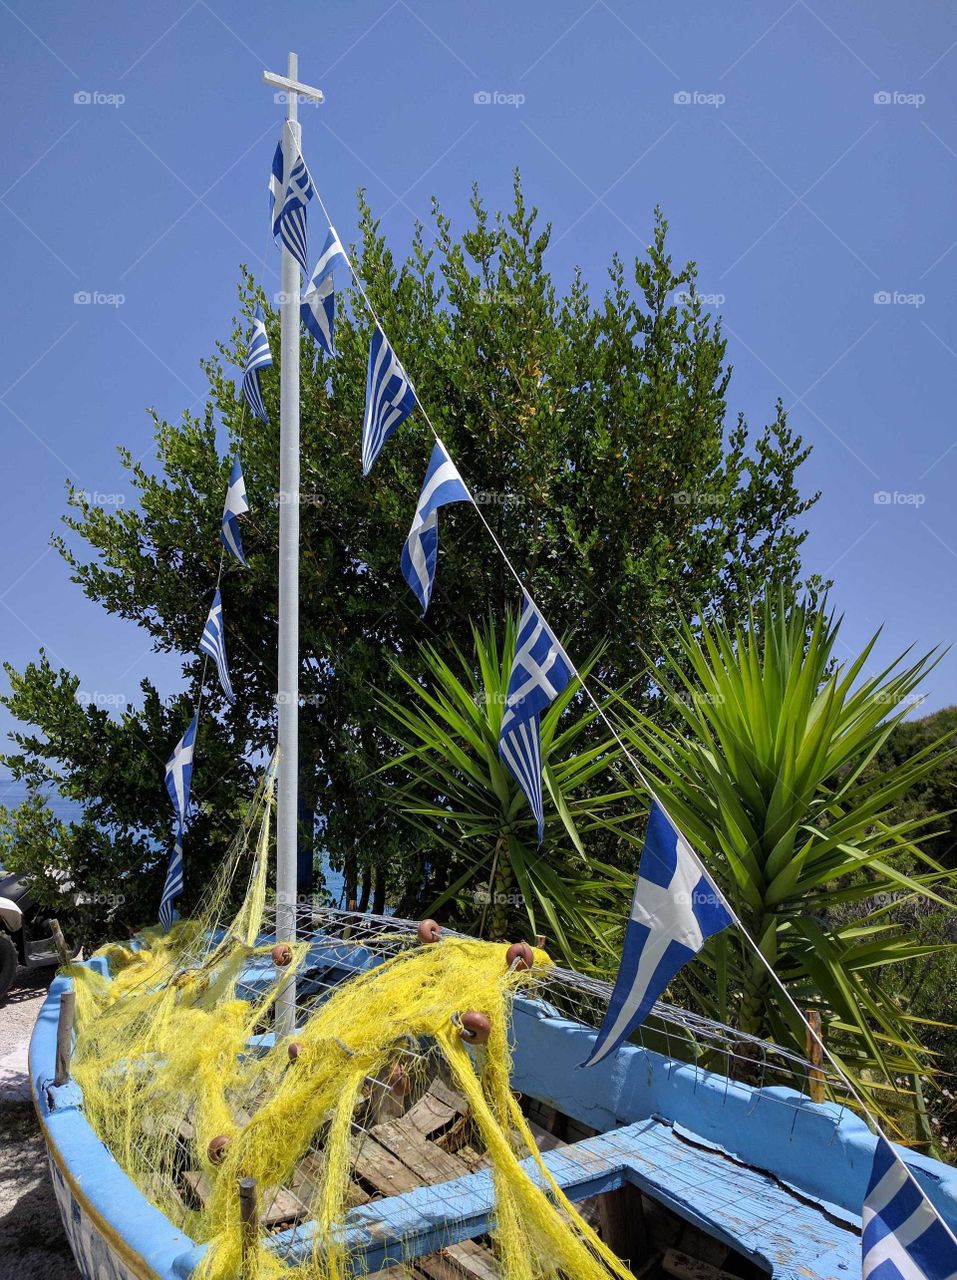 Greek Flags on Retired Boat